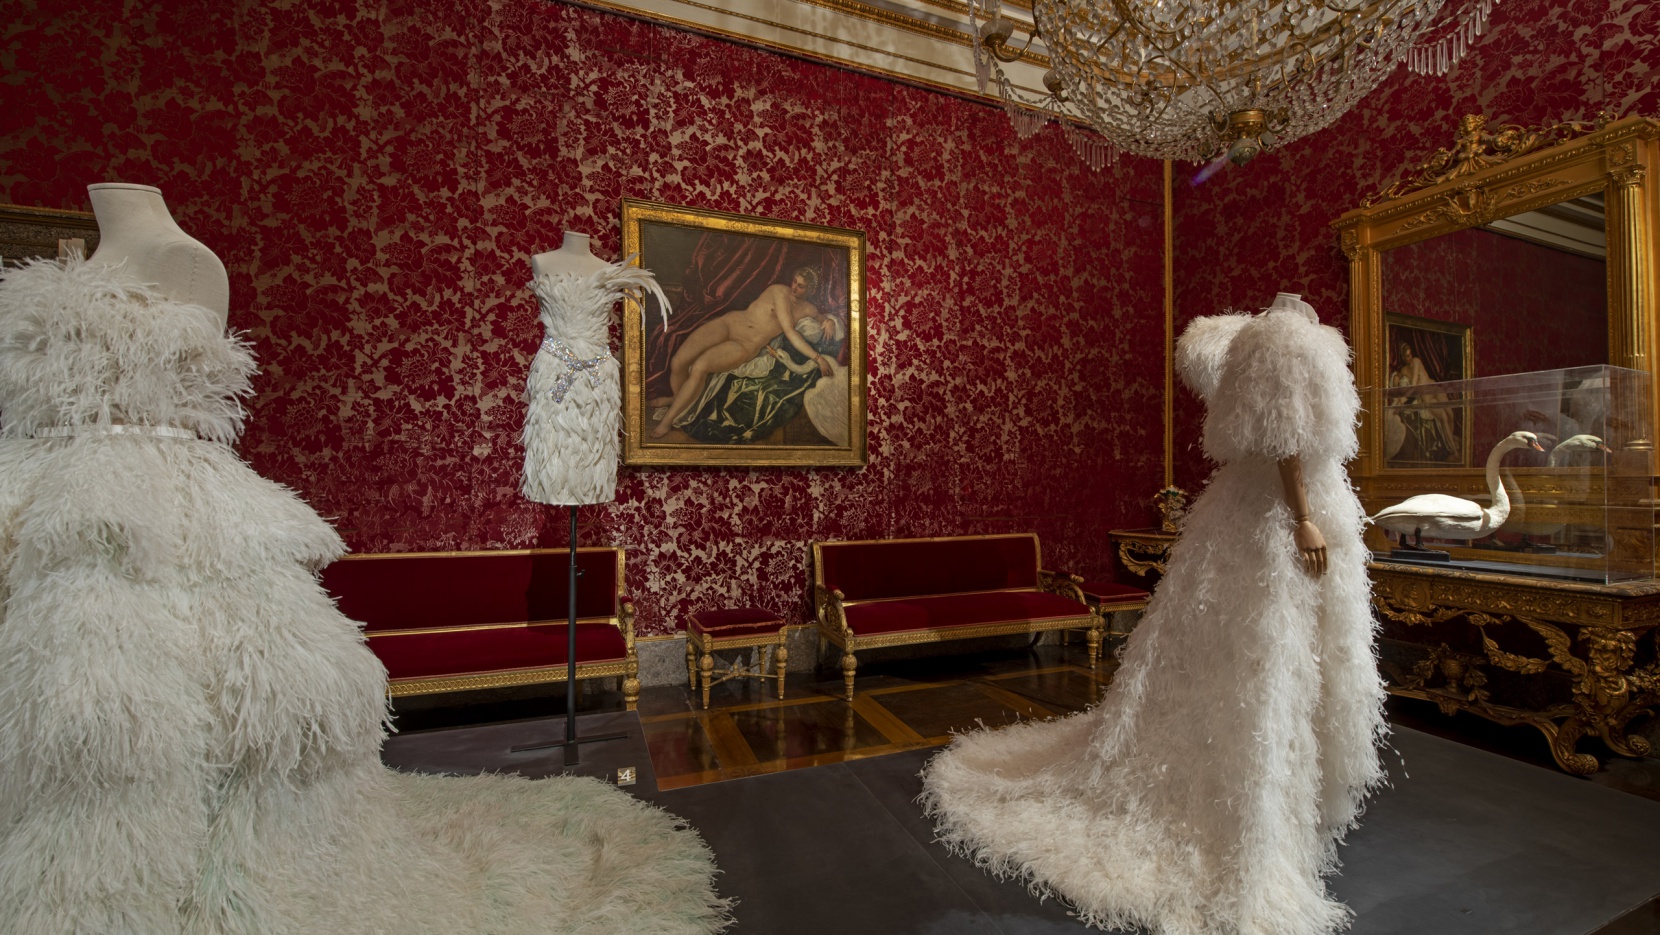 Where The Wild Things Are Animalia Fashion At Palazzo Pitti